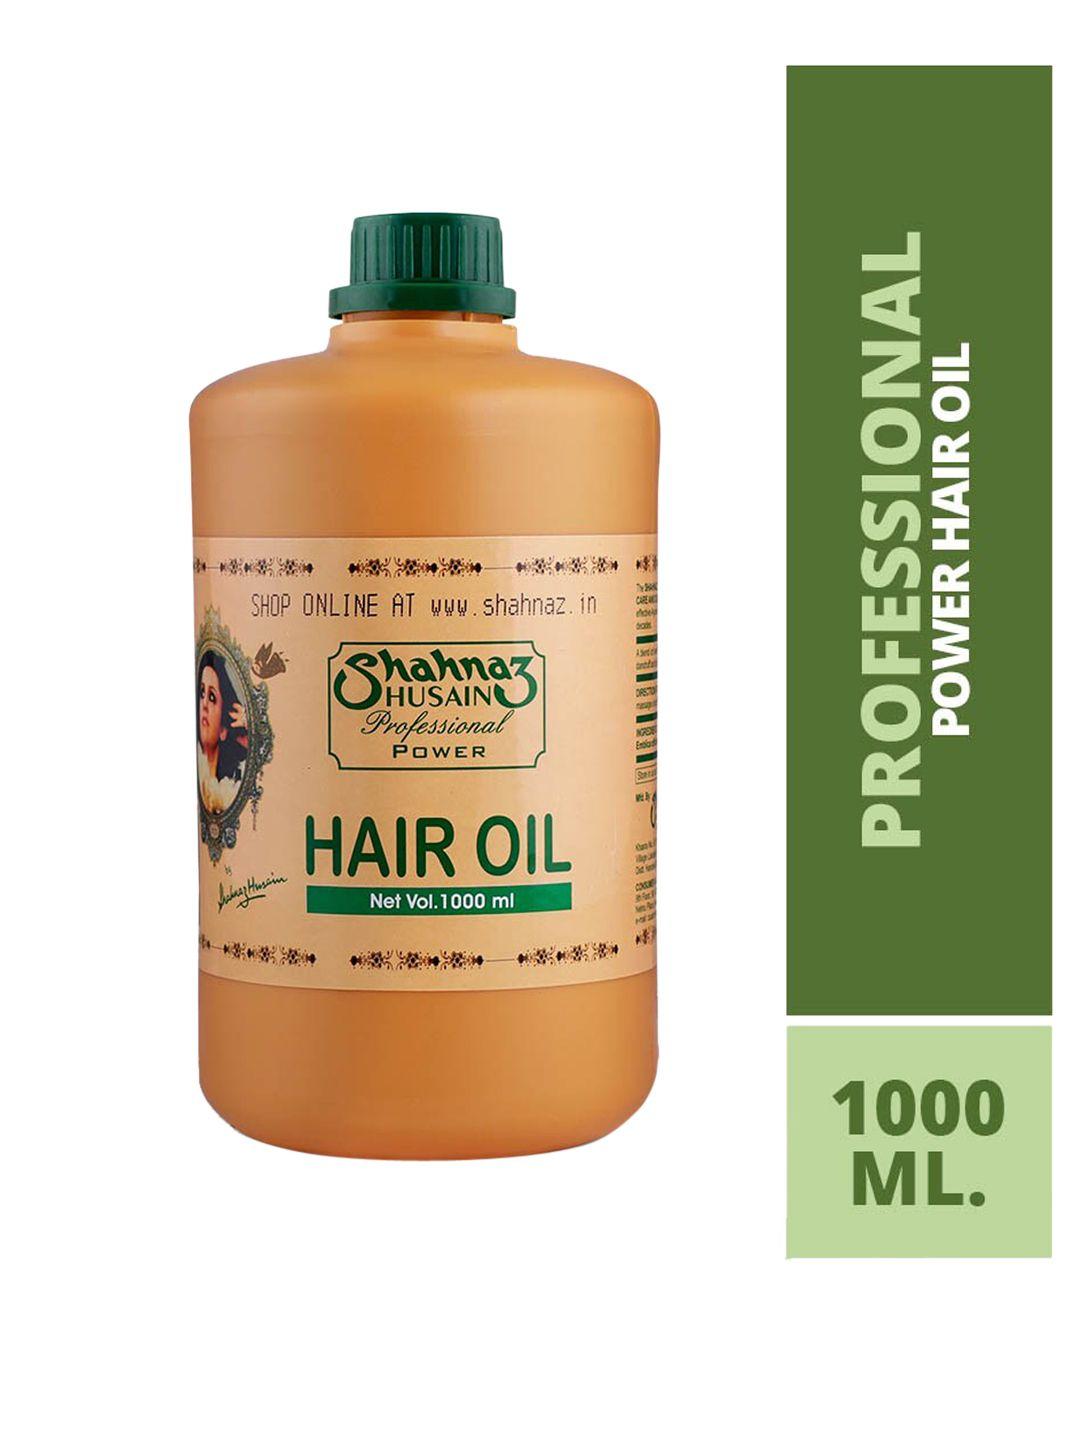 shahnaz husain professional power hair oil 1000ml